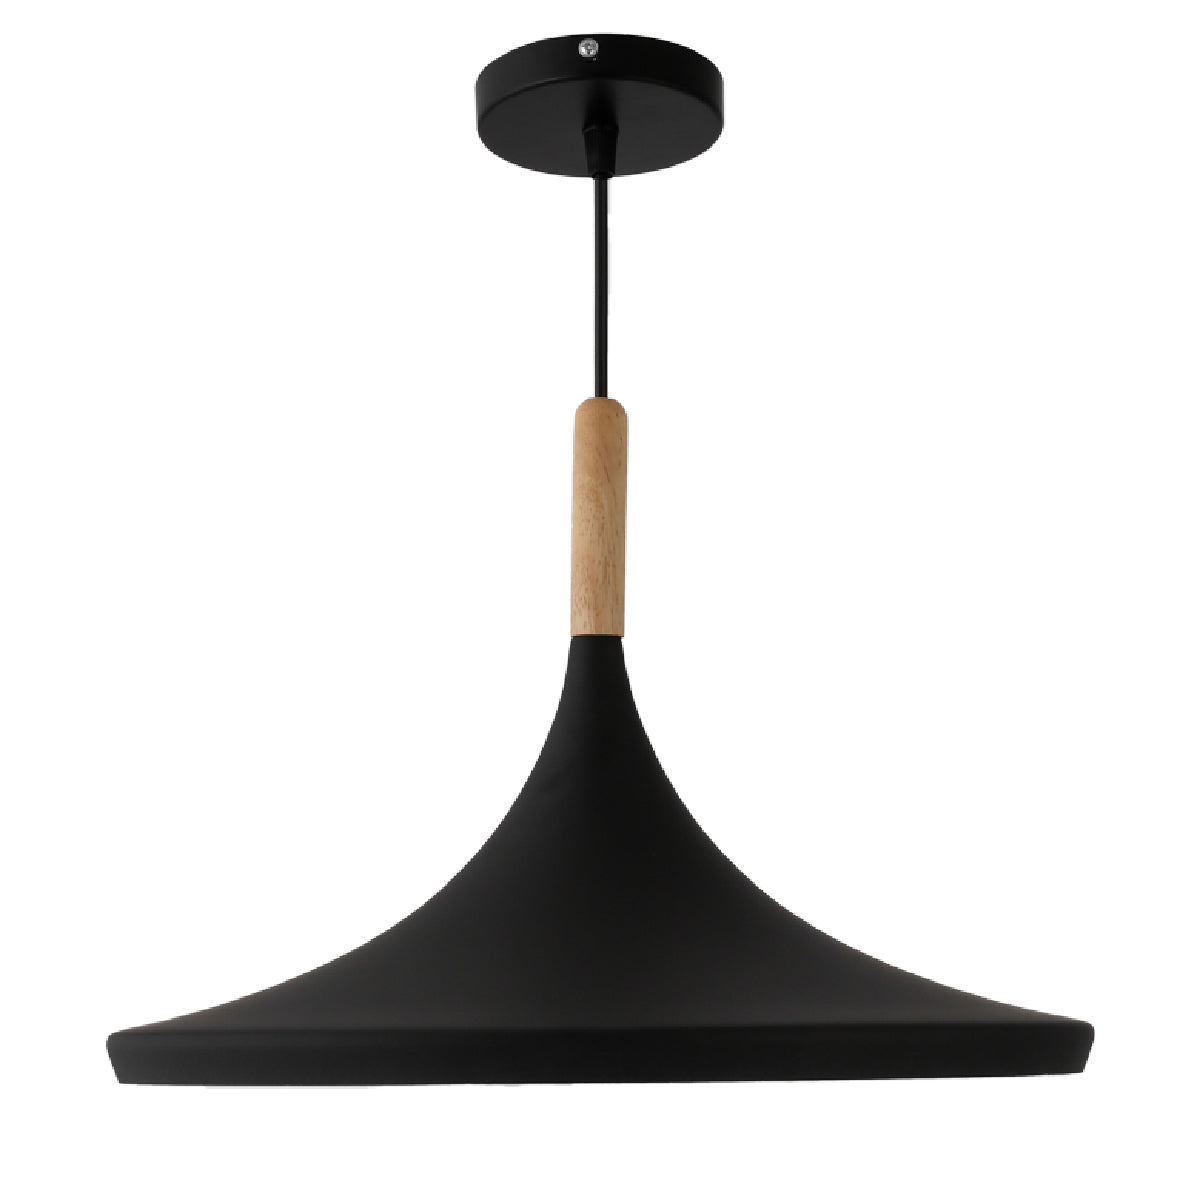 14.2inch Matte Black Pendant Light, Wide Ceiling Fixture, Industrial Style For Livingroom Bedroom-2 PCS Light